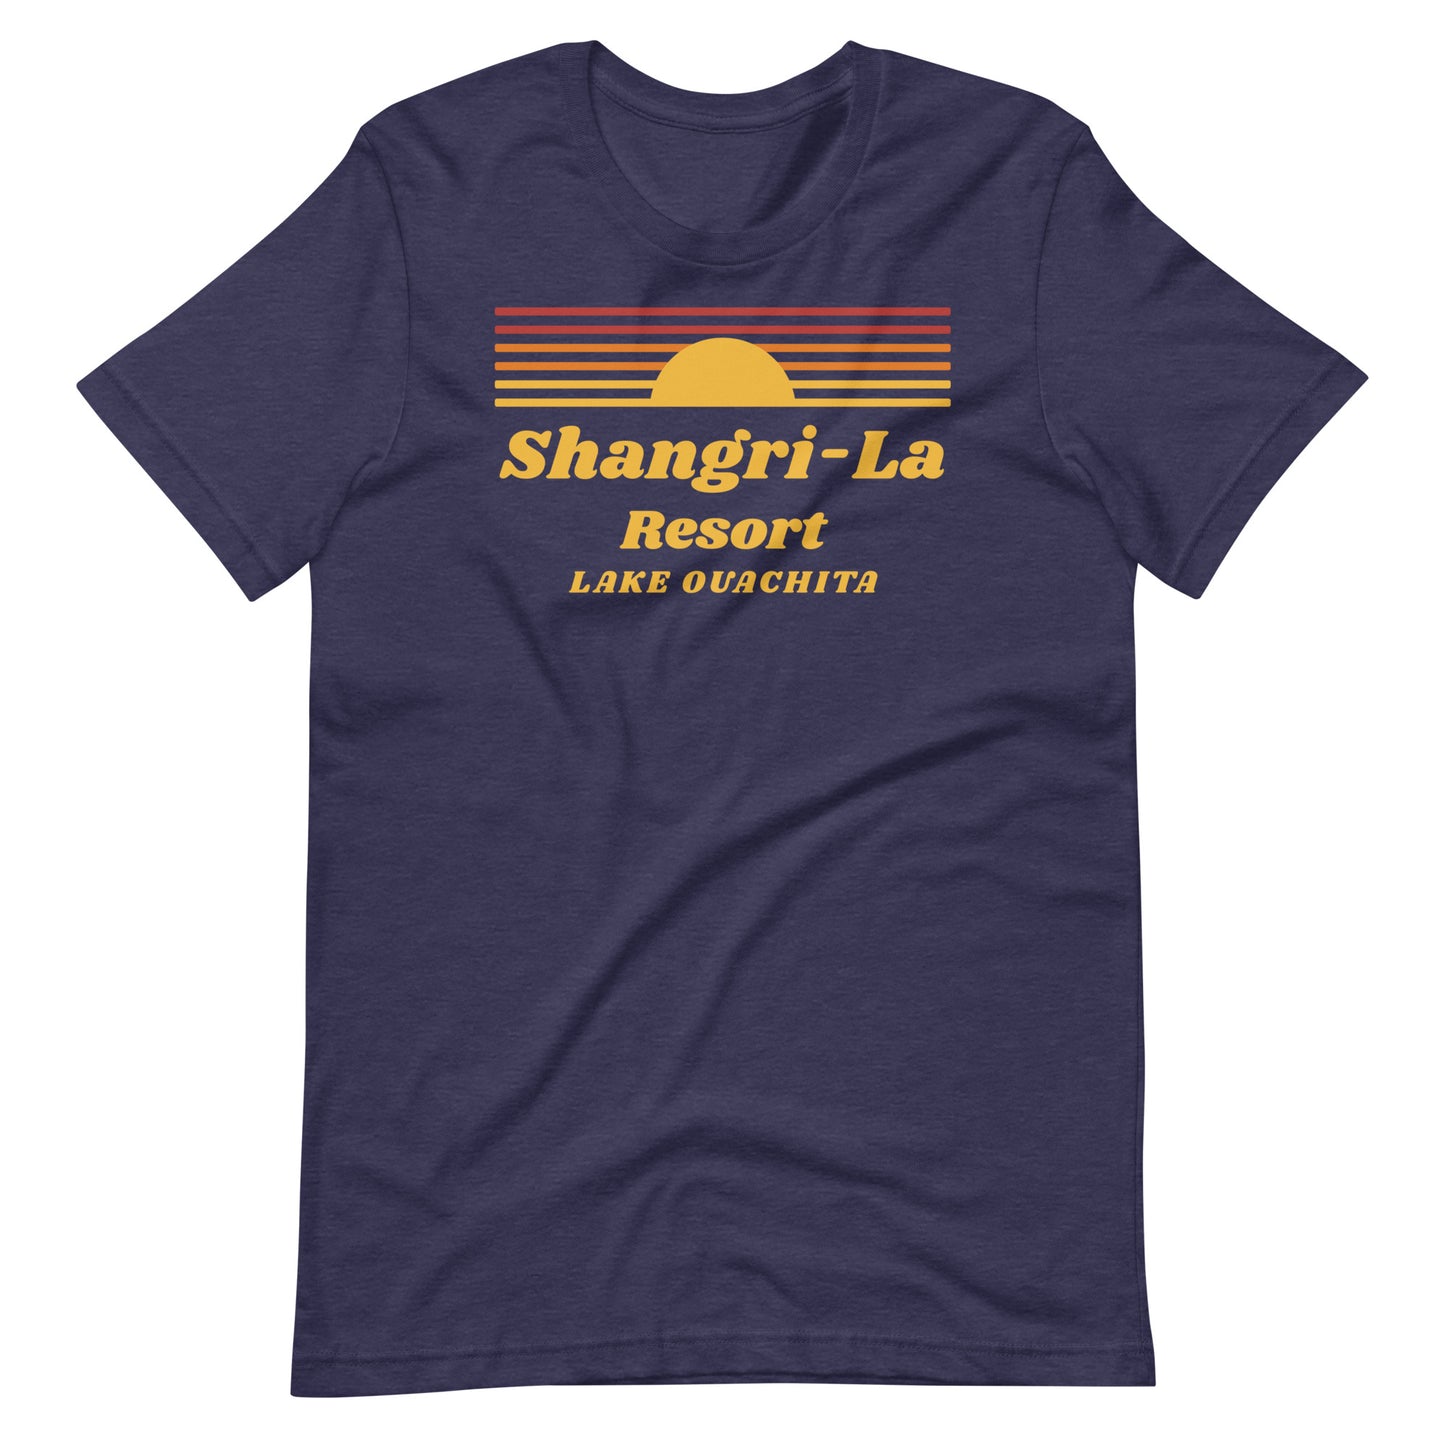 Shangri-La Sunset